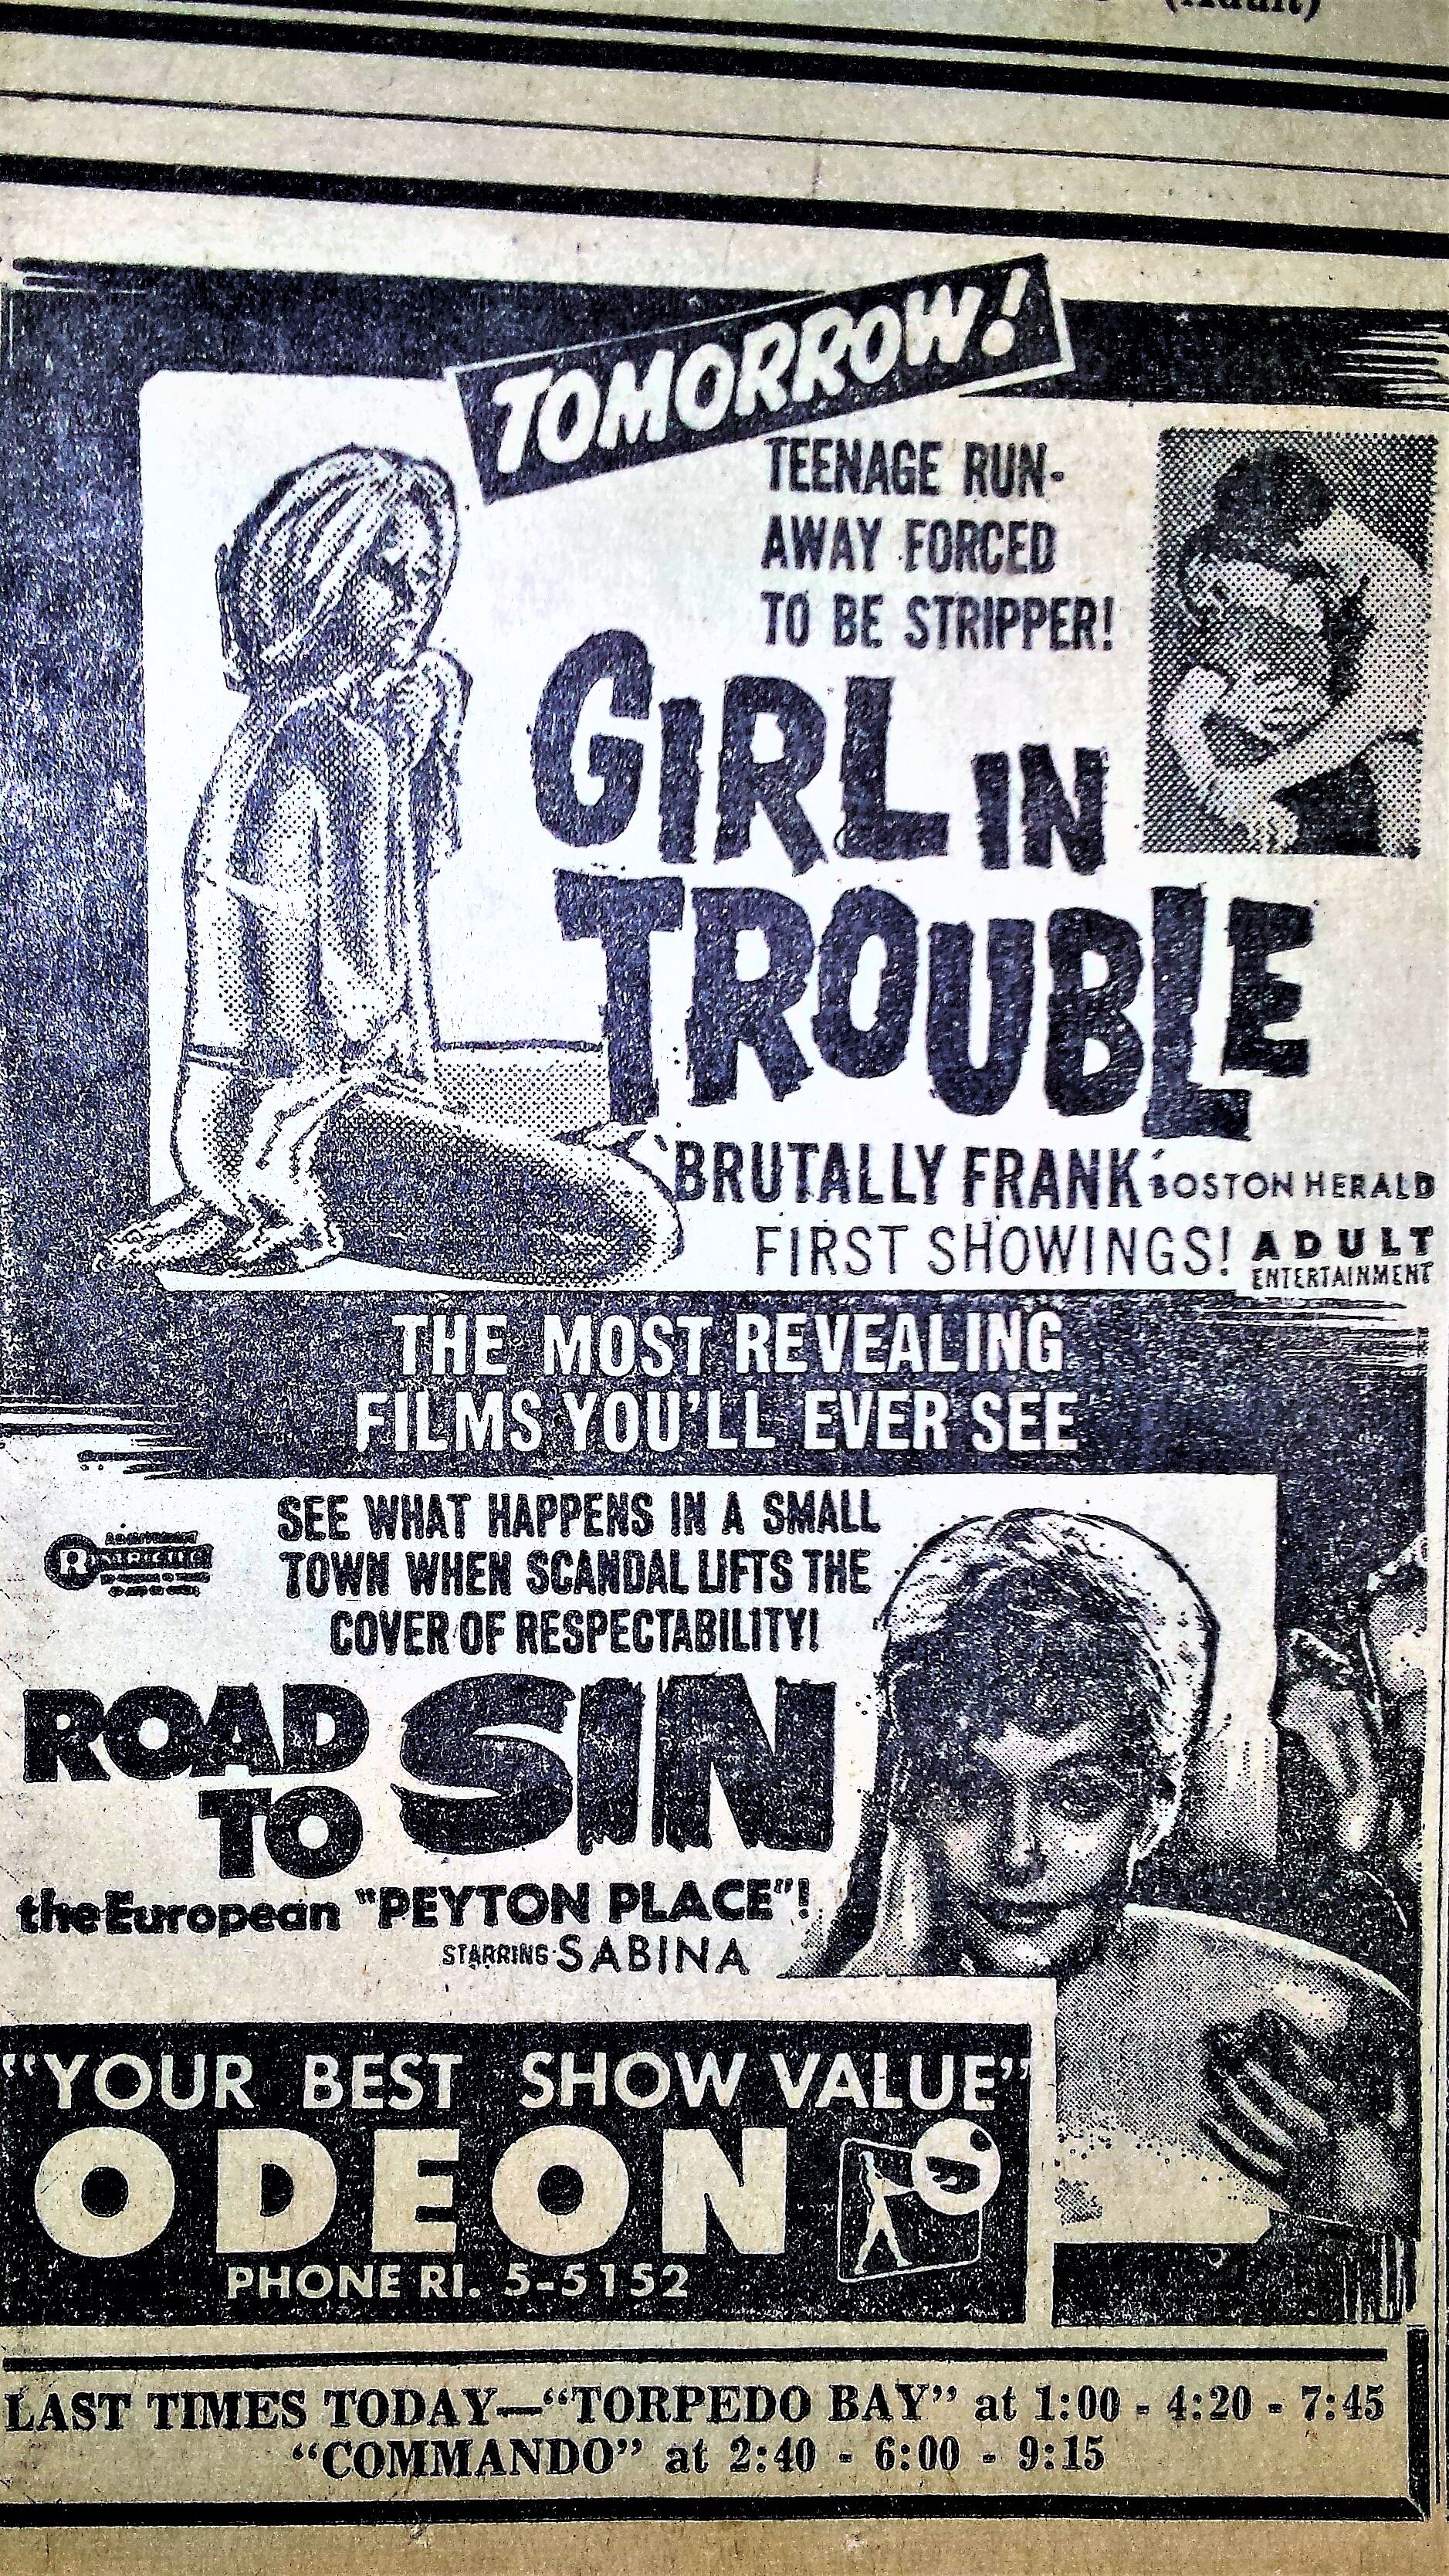 1965 May 11 p20 Odeon Girl in Trouble 2 (4).jpg